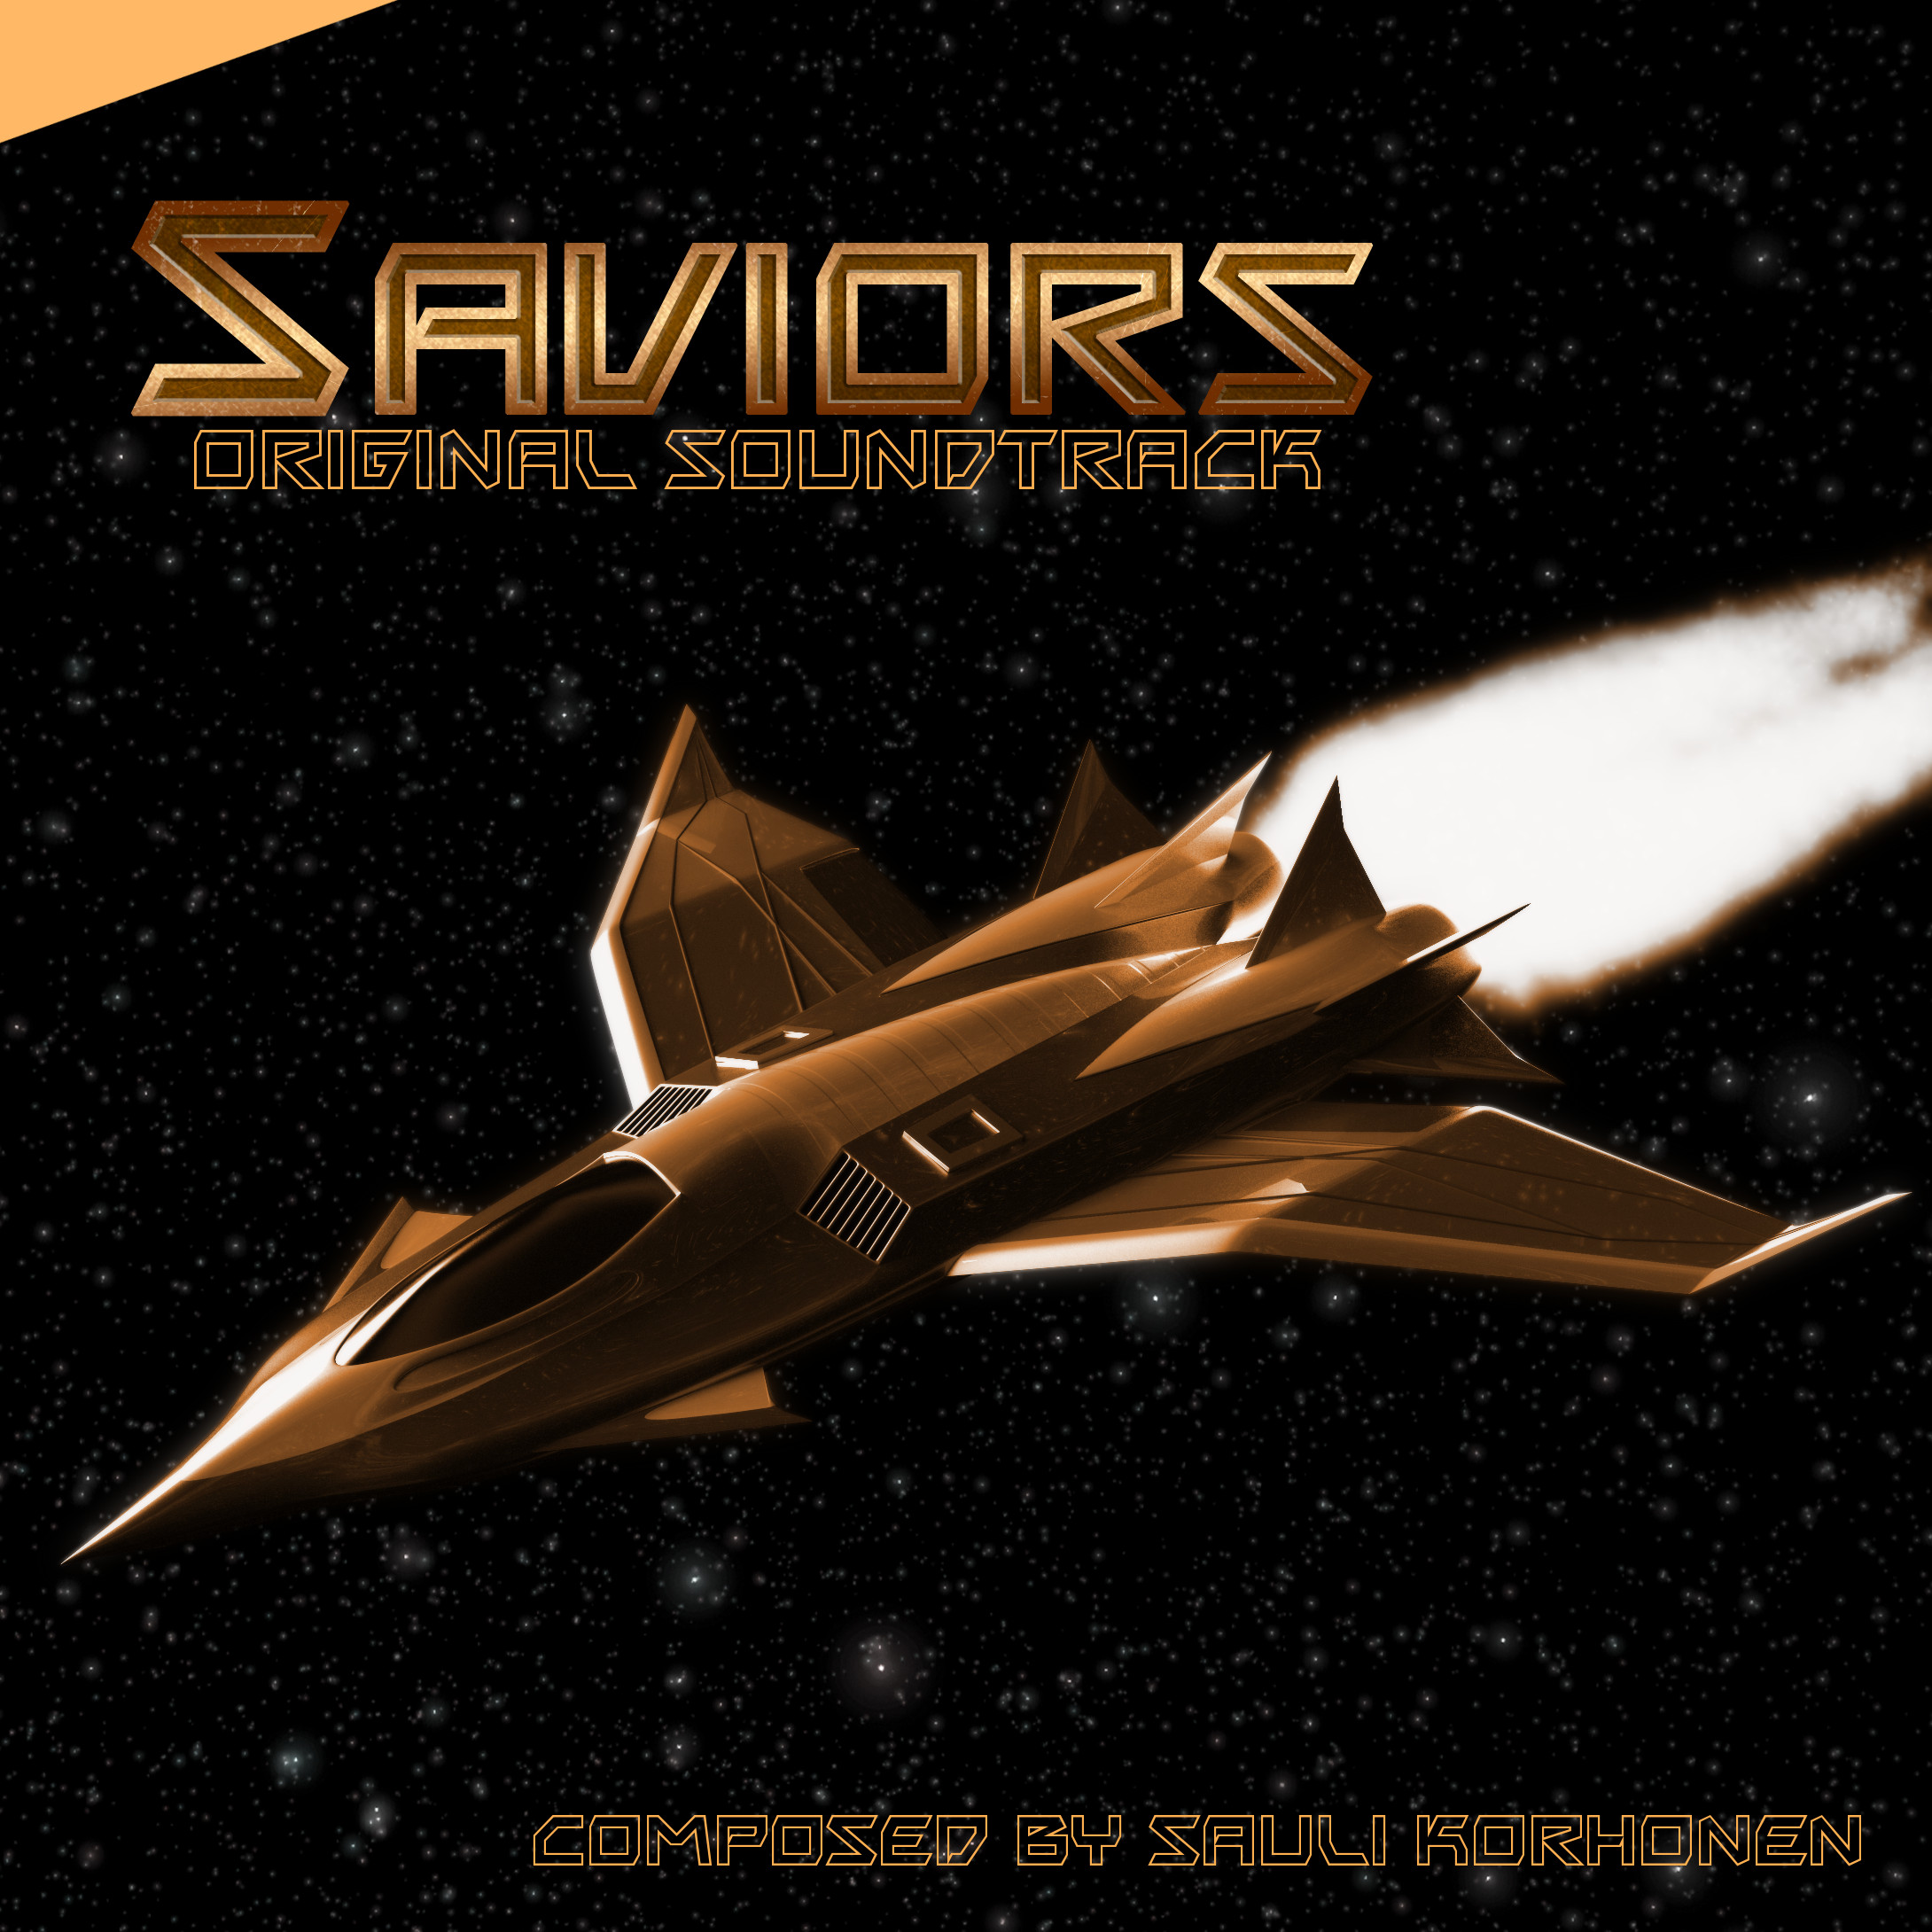 Star Saviors - Saviors OST DLC Steam Gift [$ 21.46]